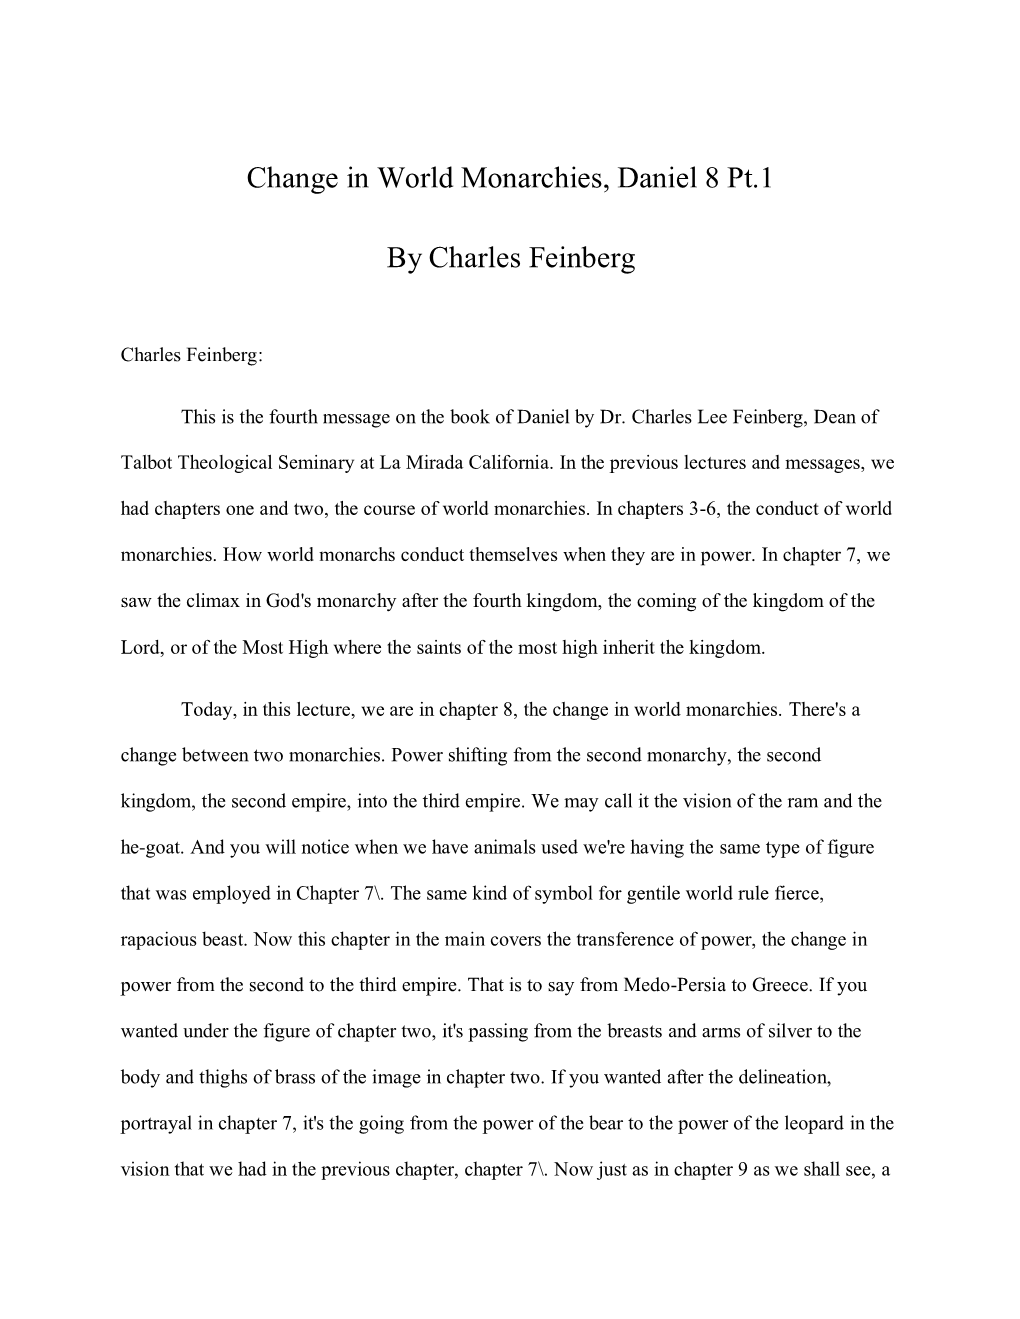 Change in World Monarchies, Daniel 8 Pt.1 by Charles Feinberg